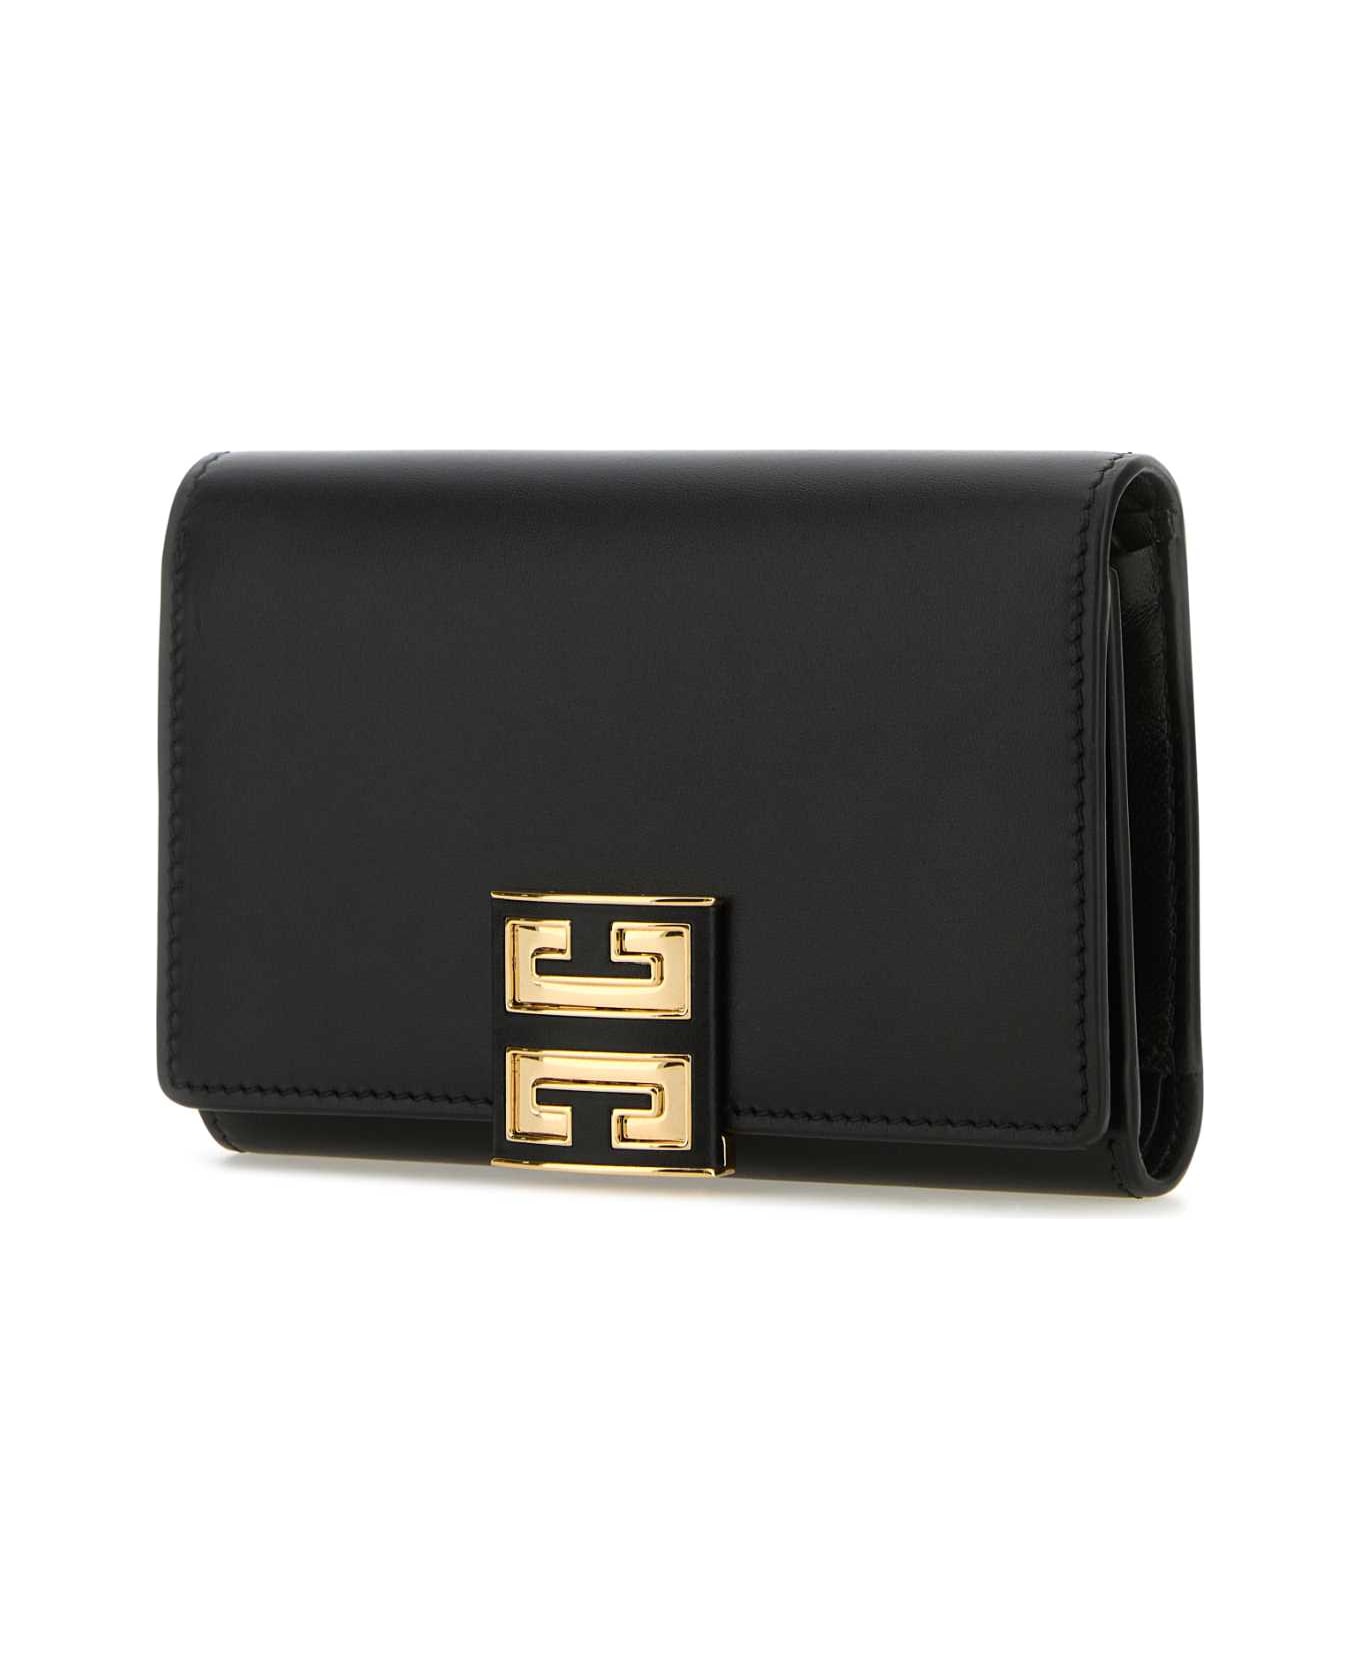 Givenchy Black Leather 4g Wallet - BLACK